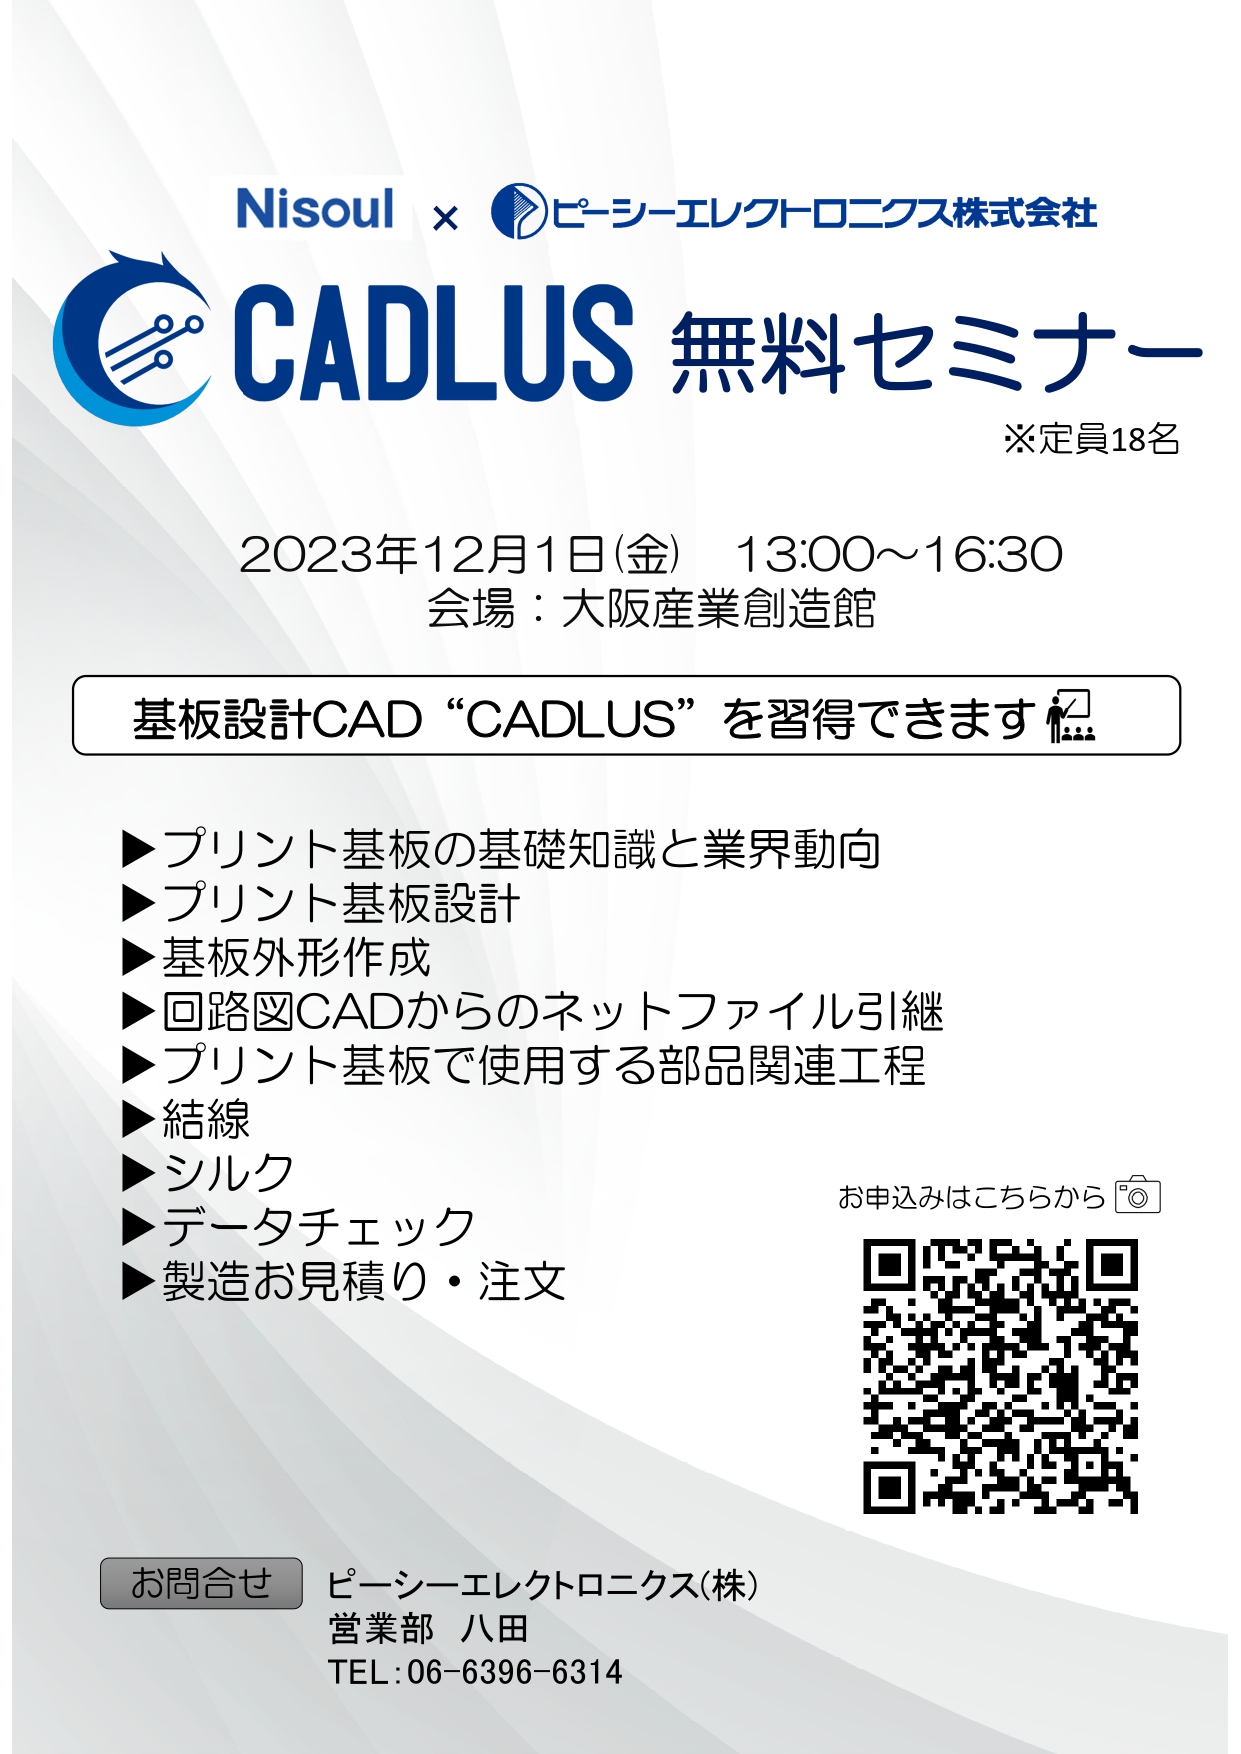 CADLUS無料セミナー開催のお知らせ